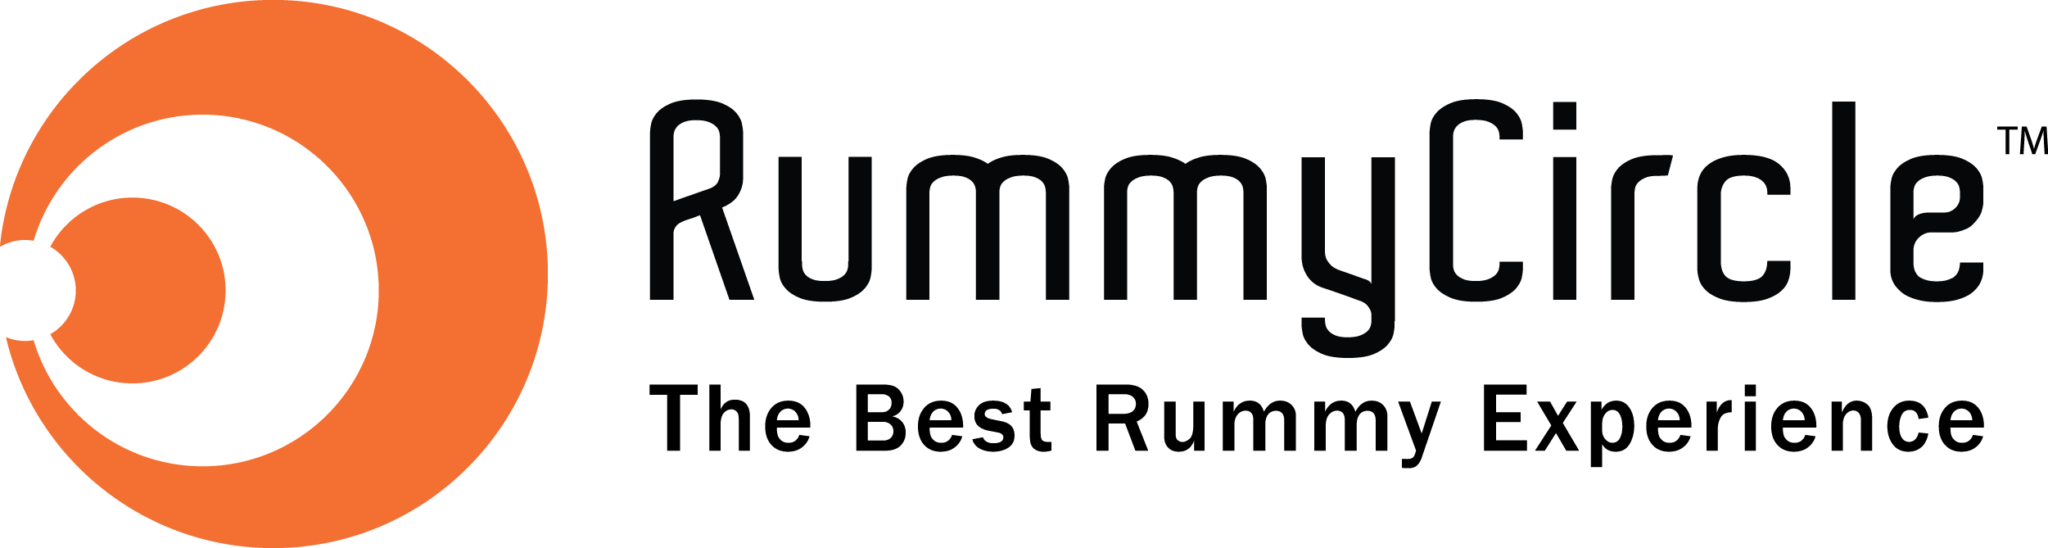 RummyCircle_logo11-2048x548